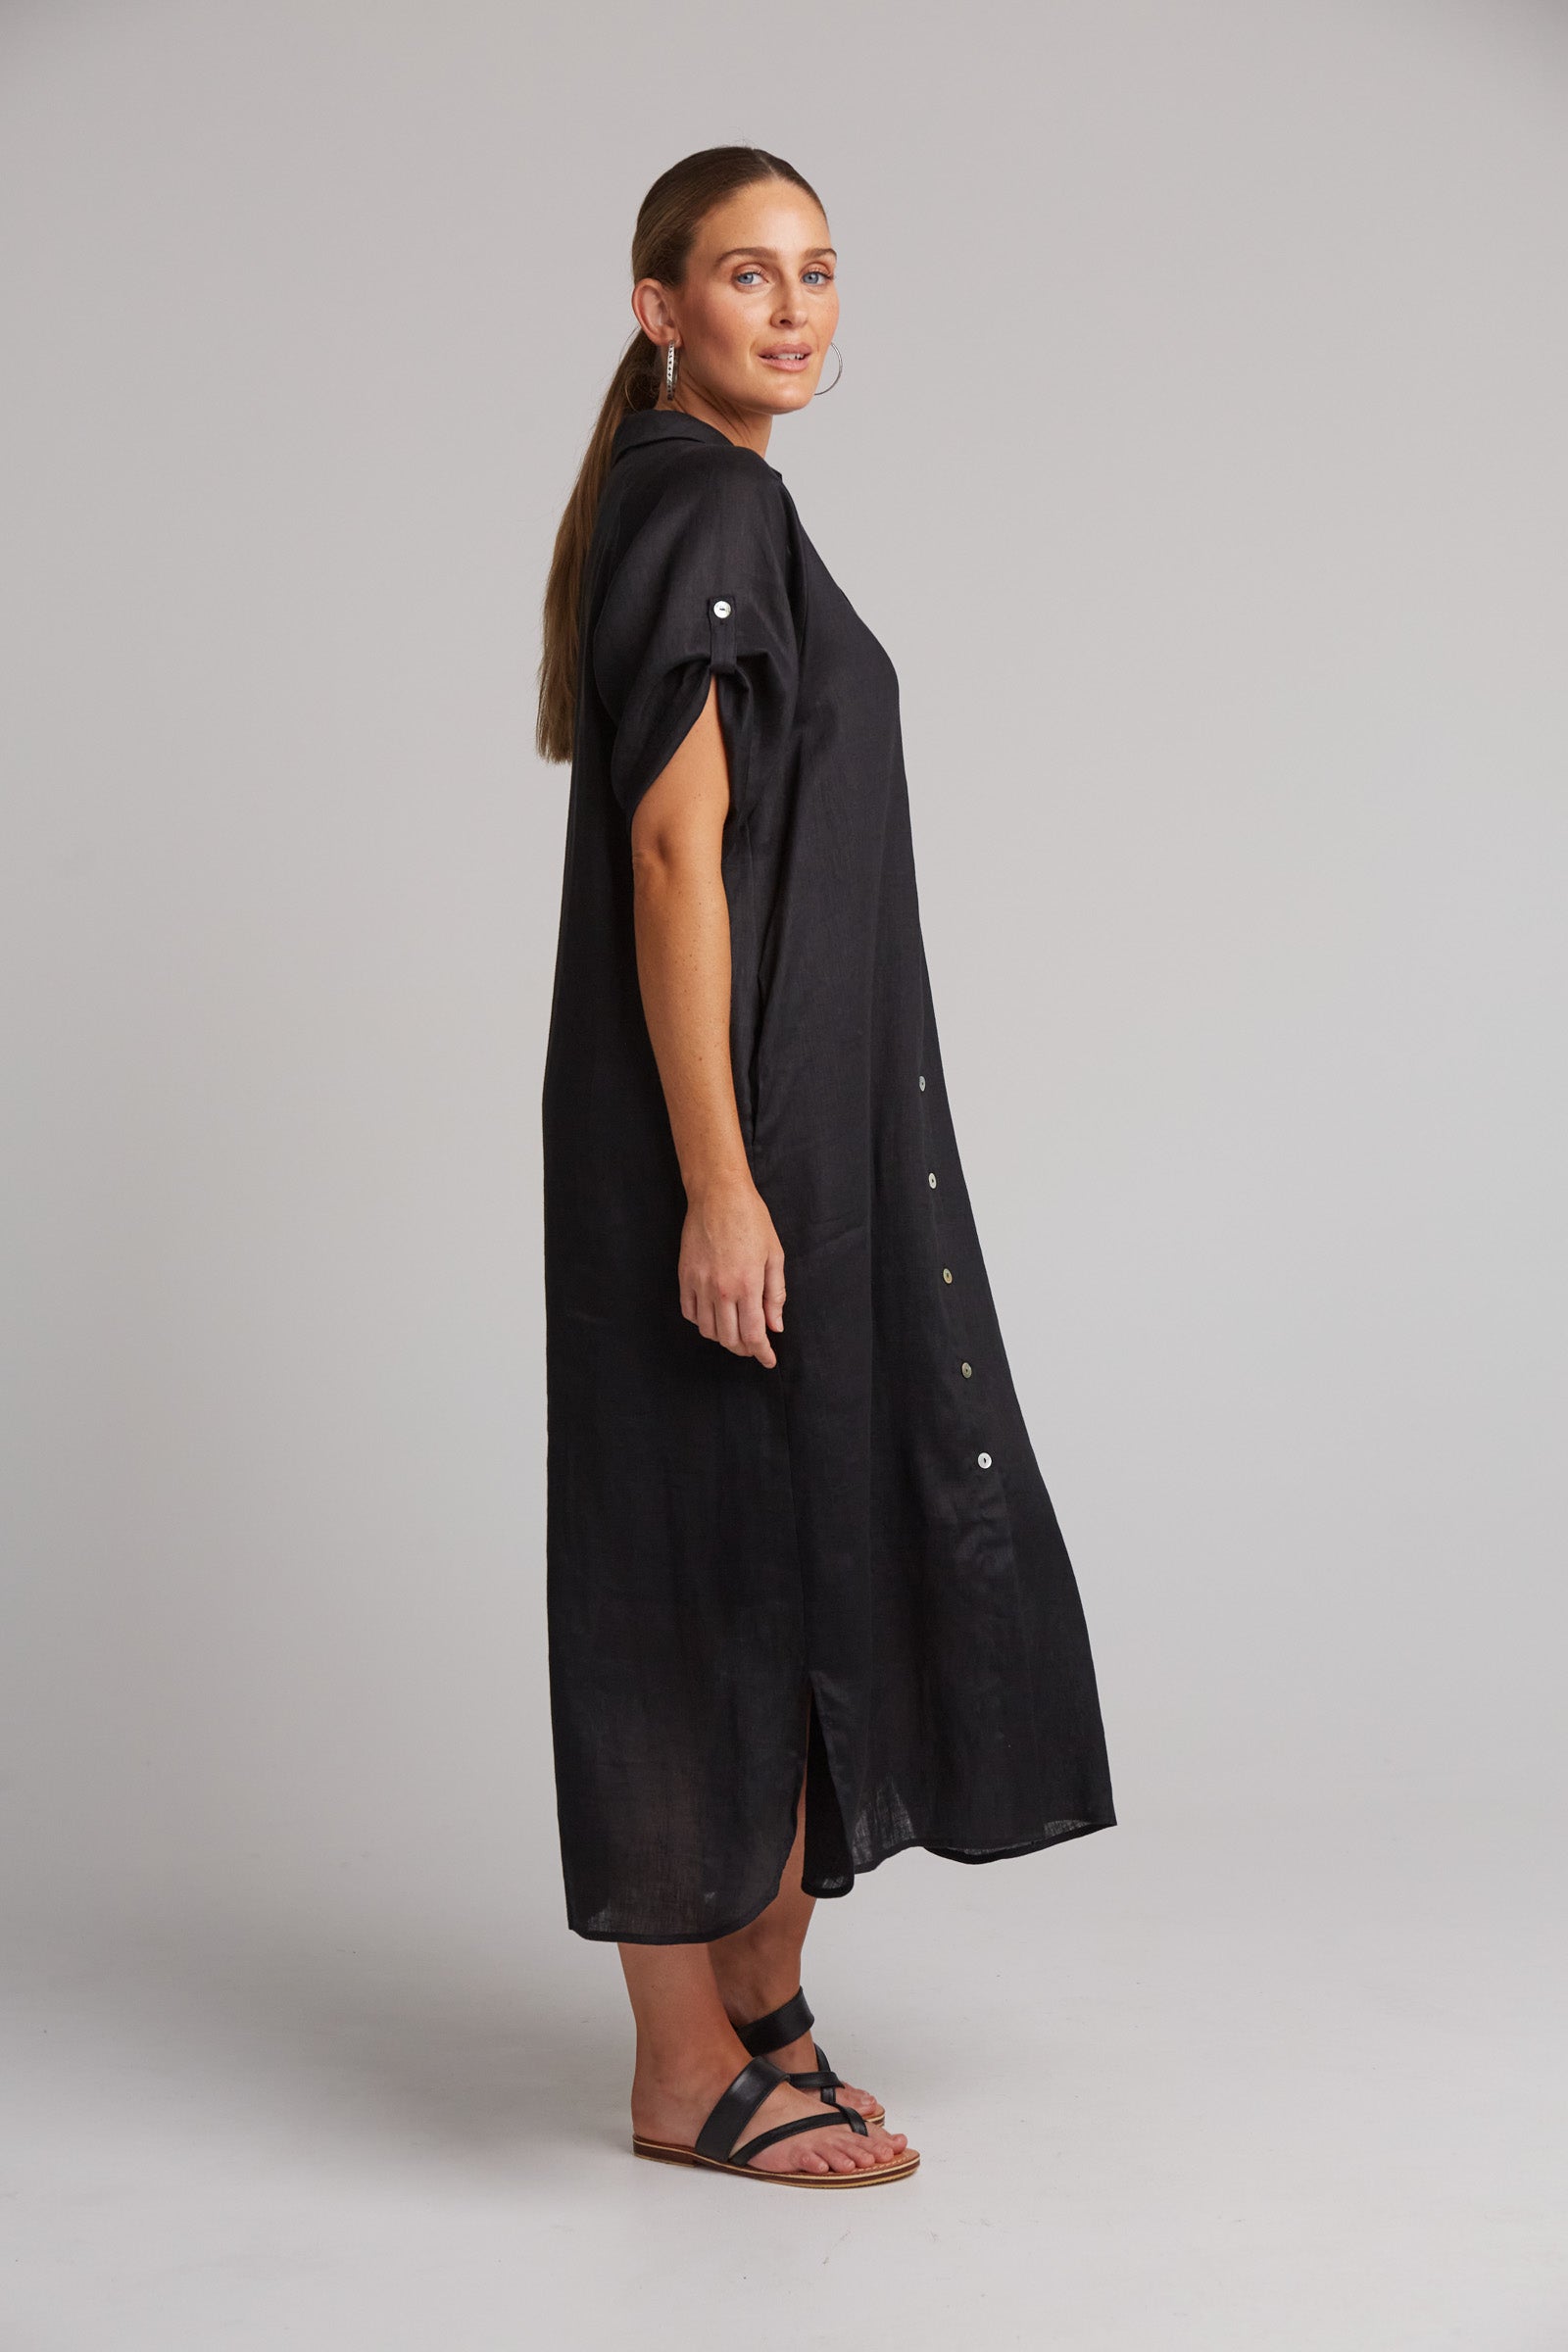 Studio Shirt Dress - Ebony - eb&ive Clothing - Shirt Dress Mid Linen